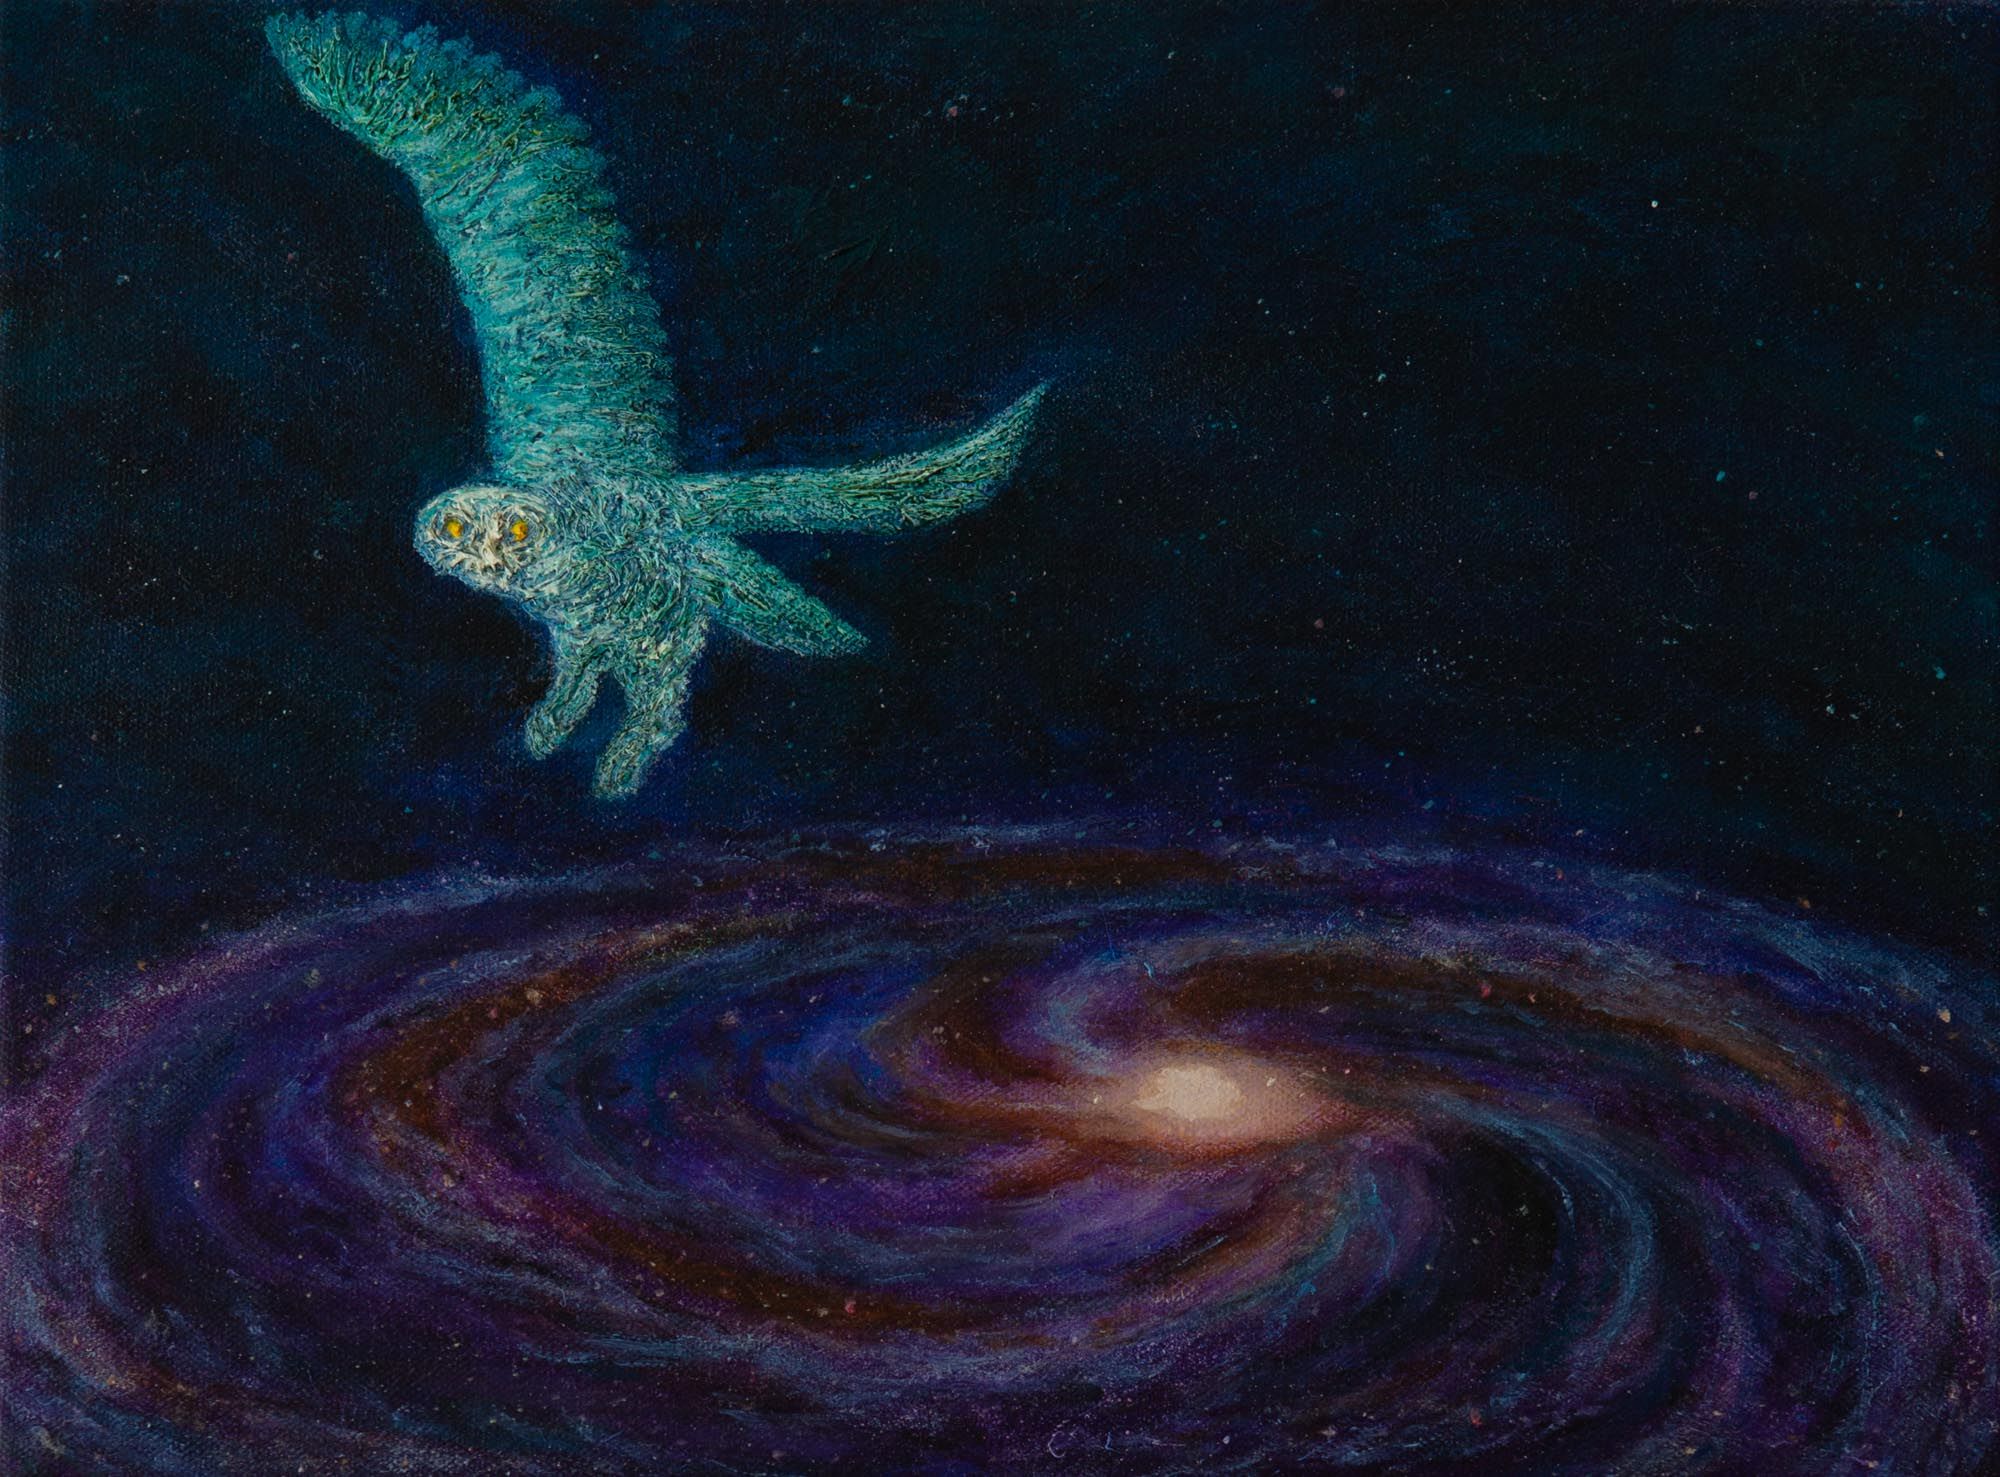 Space Tourism: Milky Way with snowy owl